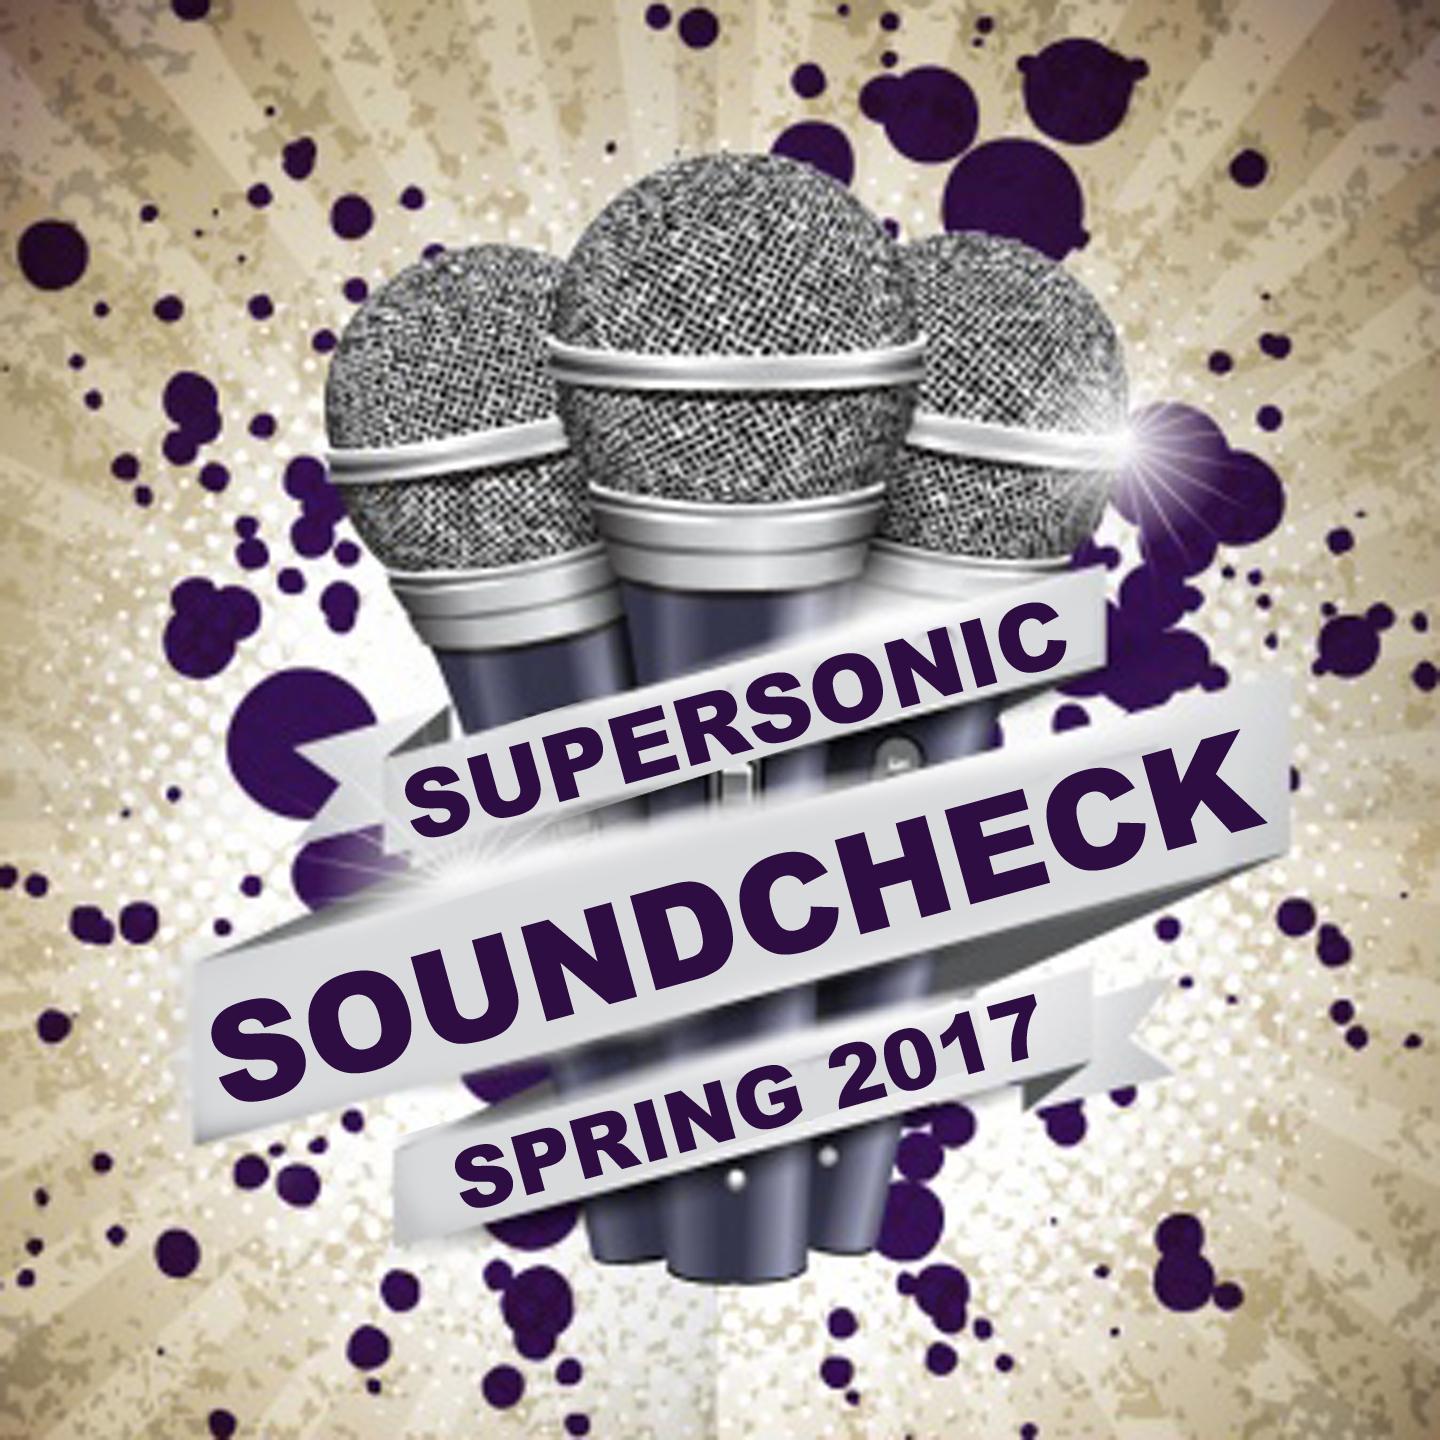 Supersonic Soundcheck